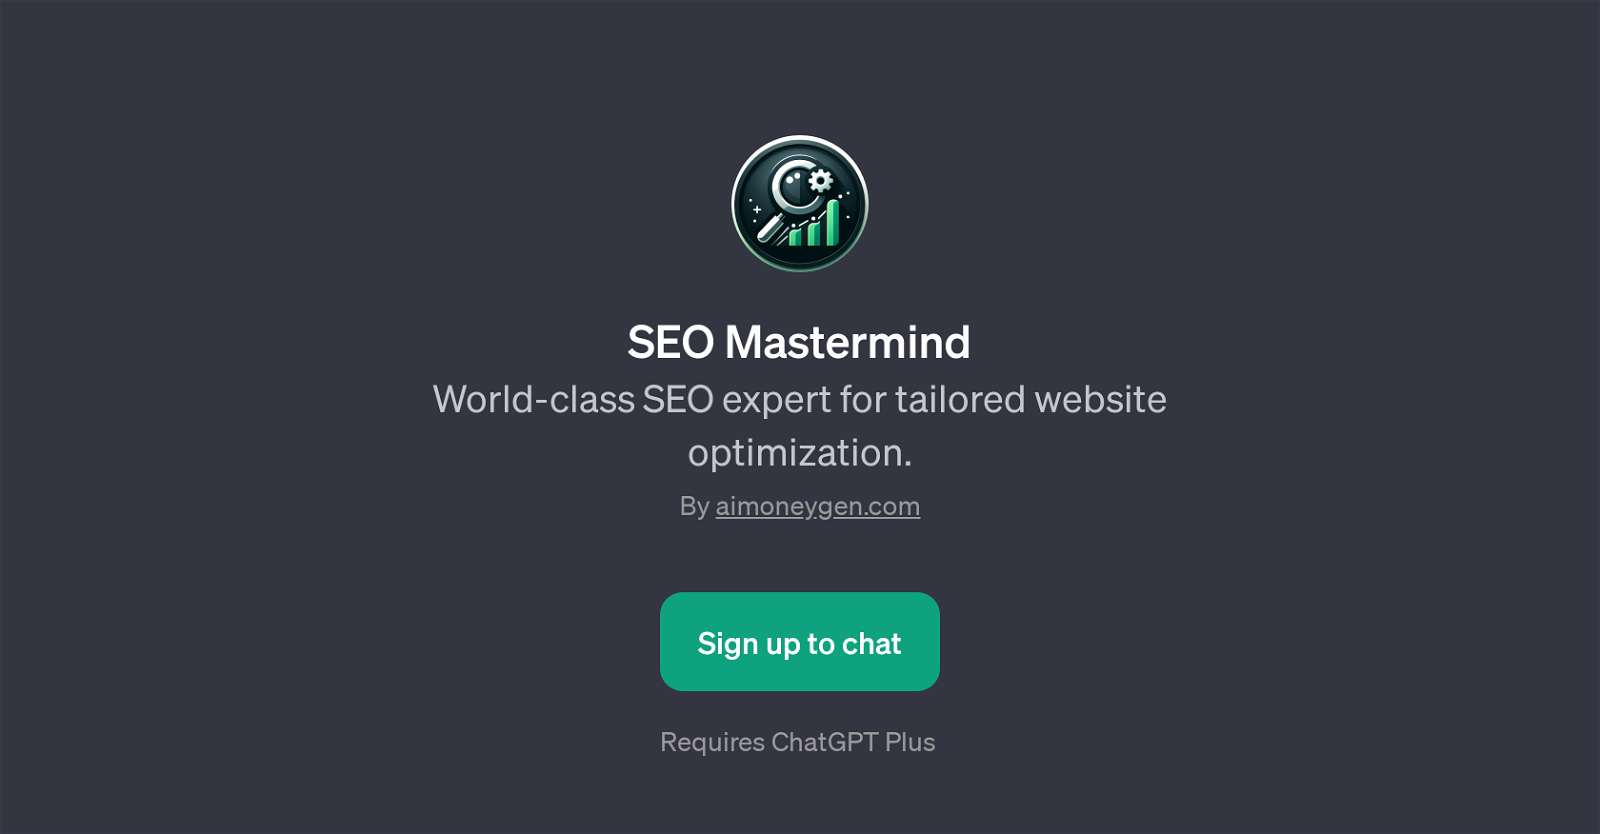 SEO Mastermind website